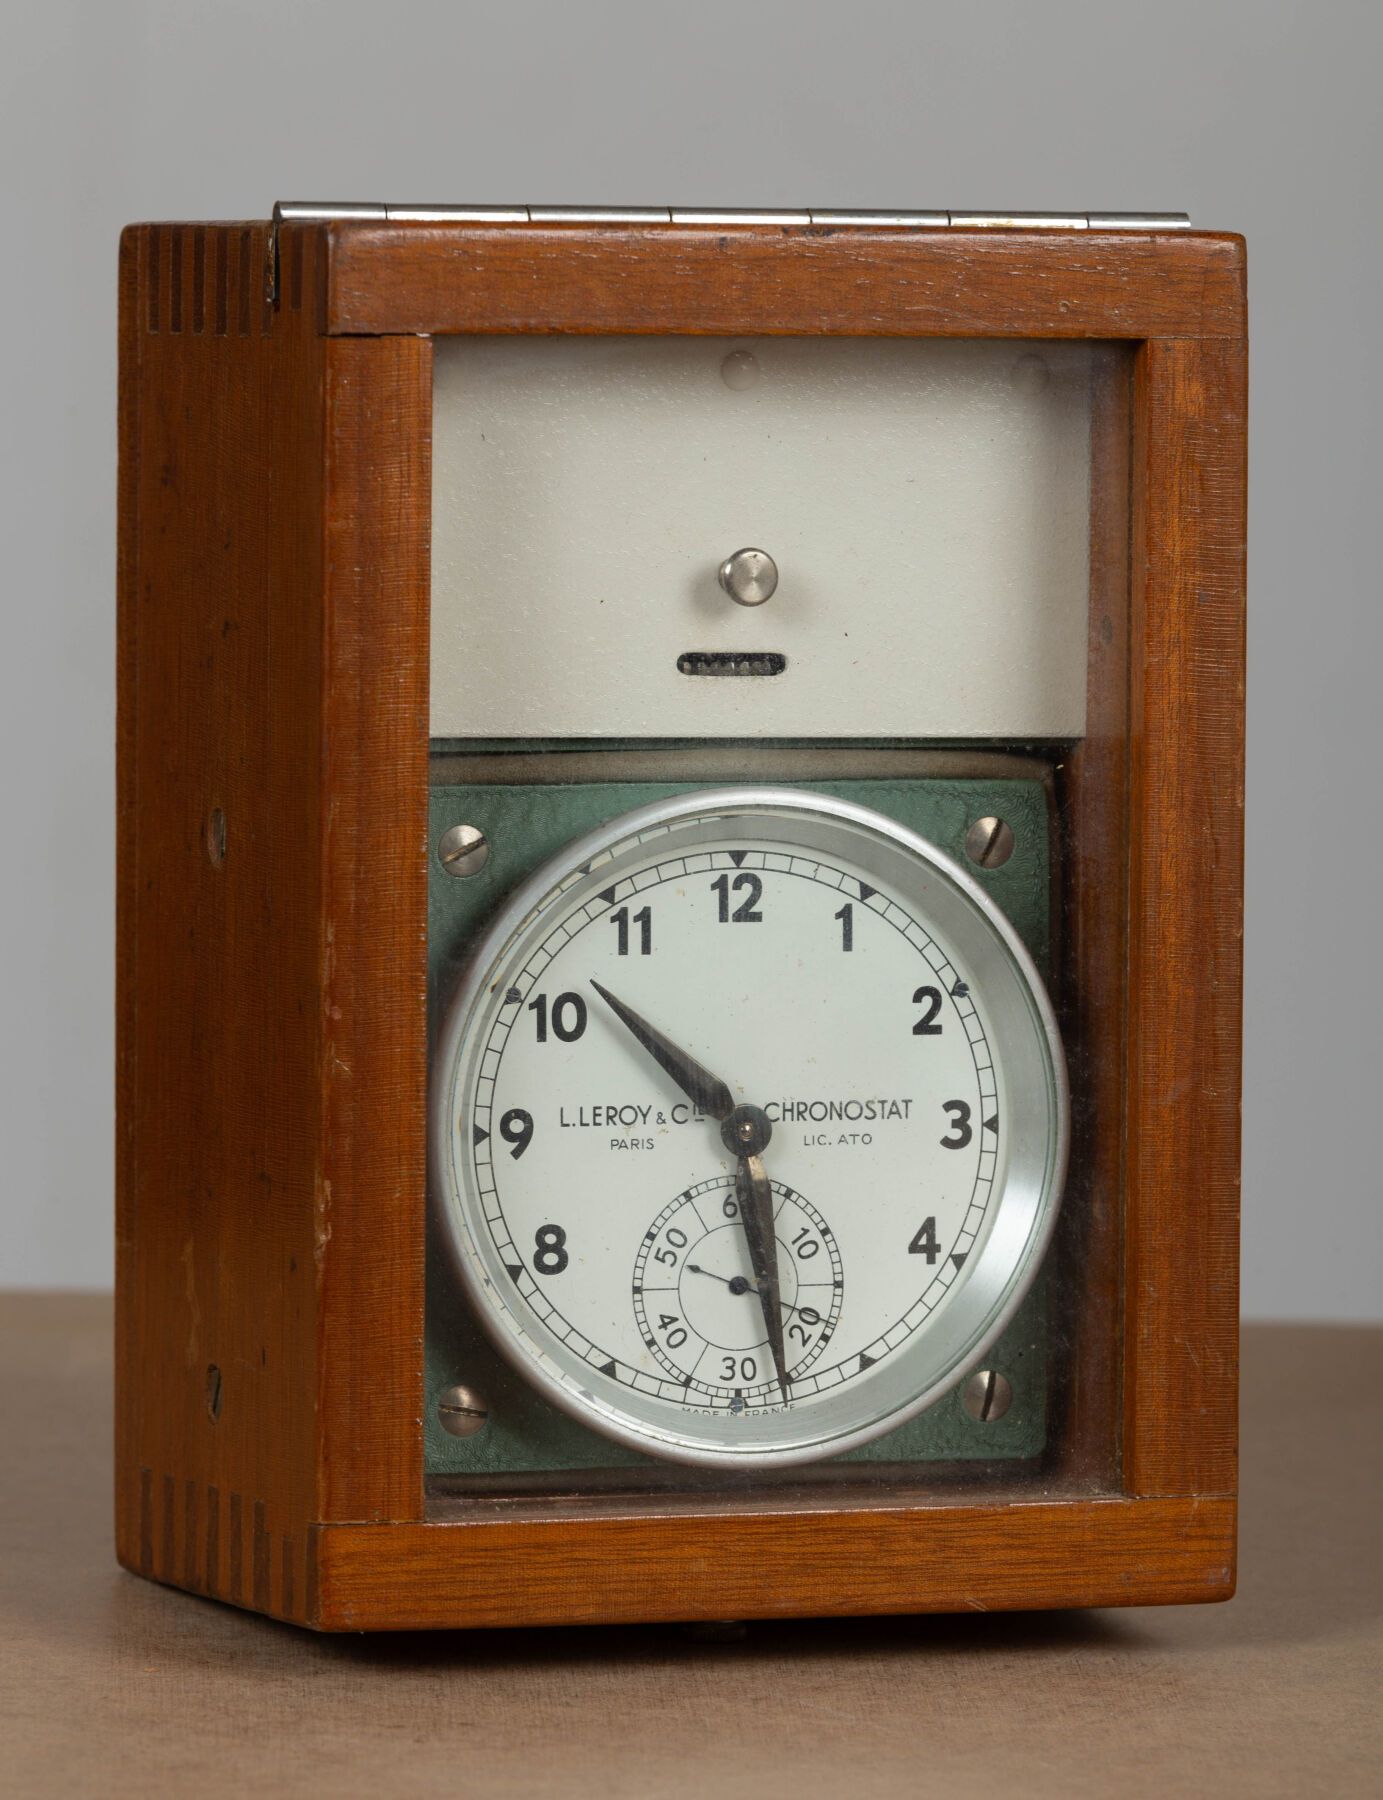 Null LEROY & Cie.
Chronostat III, n° 1925.
Chronomètre de marine en bois exotiqu&hellip;